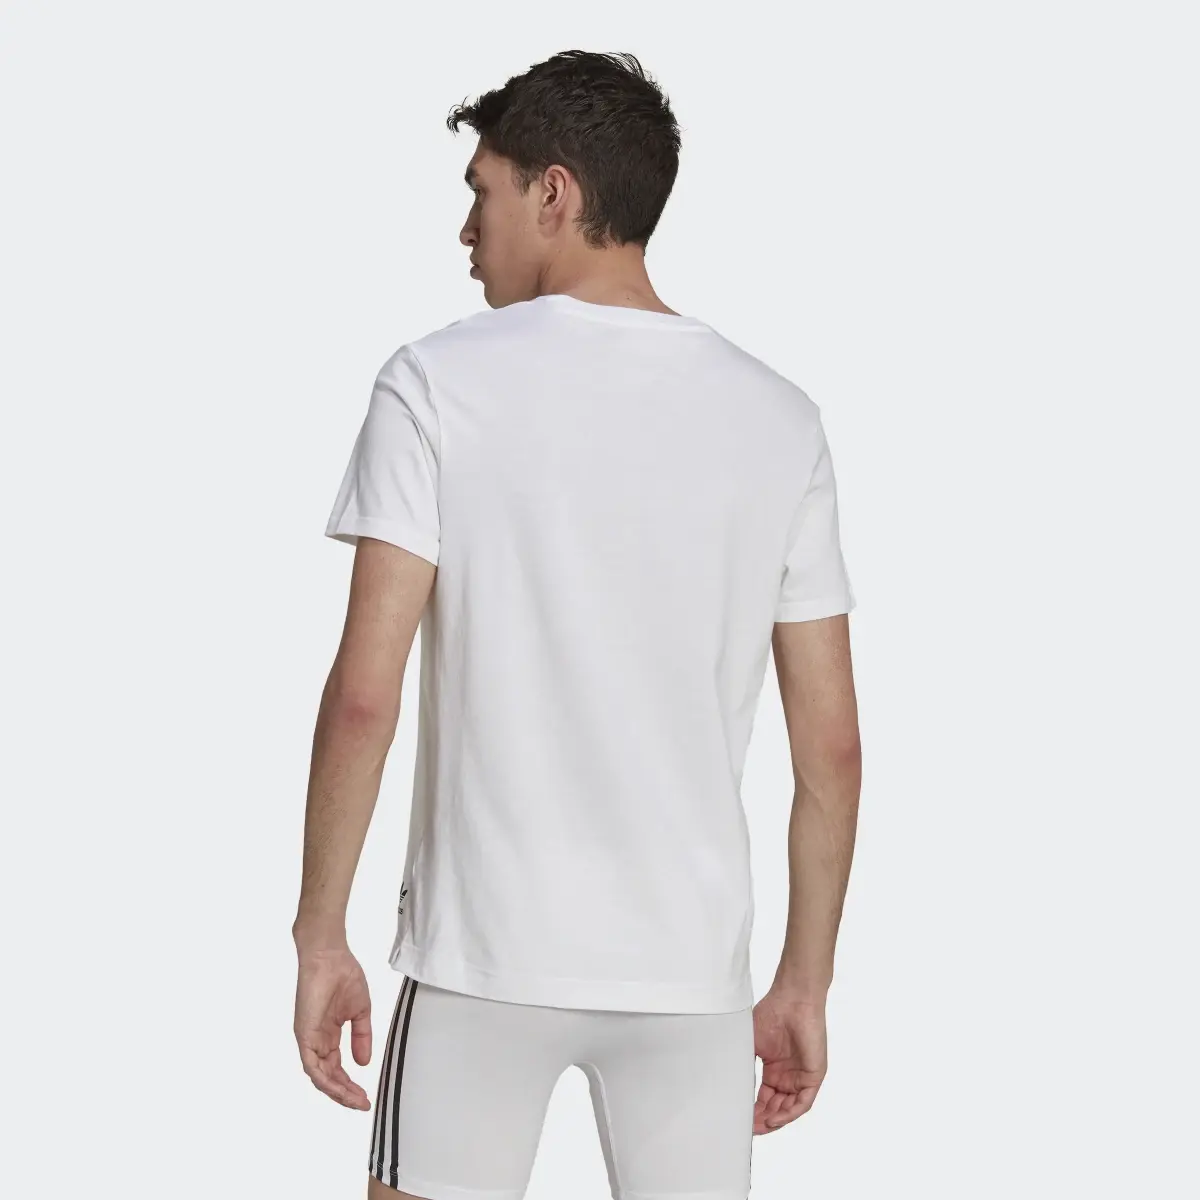 Adidas Comfort Core Cotton Crewneck T-Shirt Underwear. 3